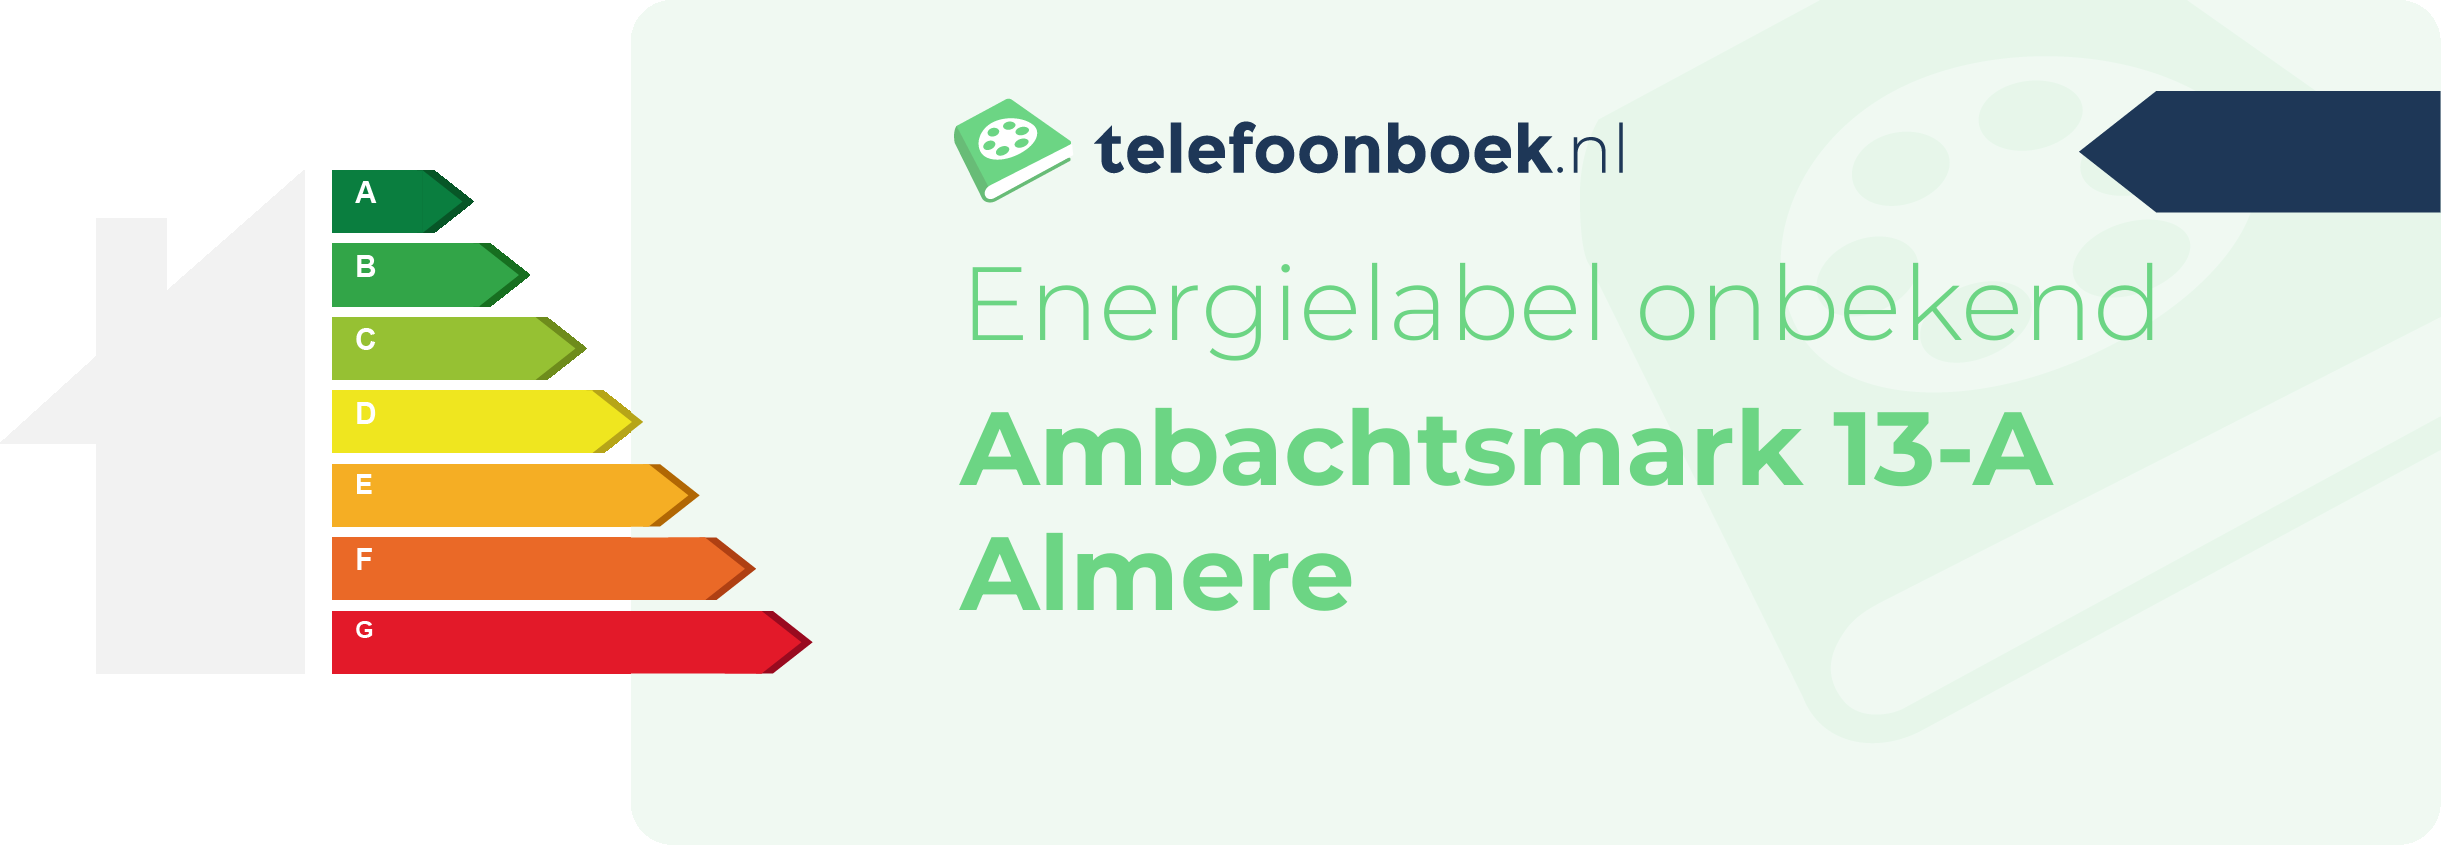 Energielabel Ambachtsmark 13-A Almere